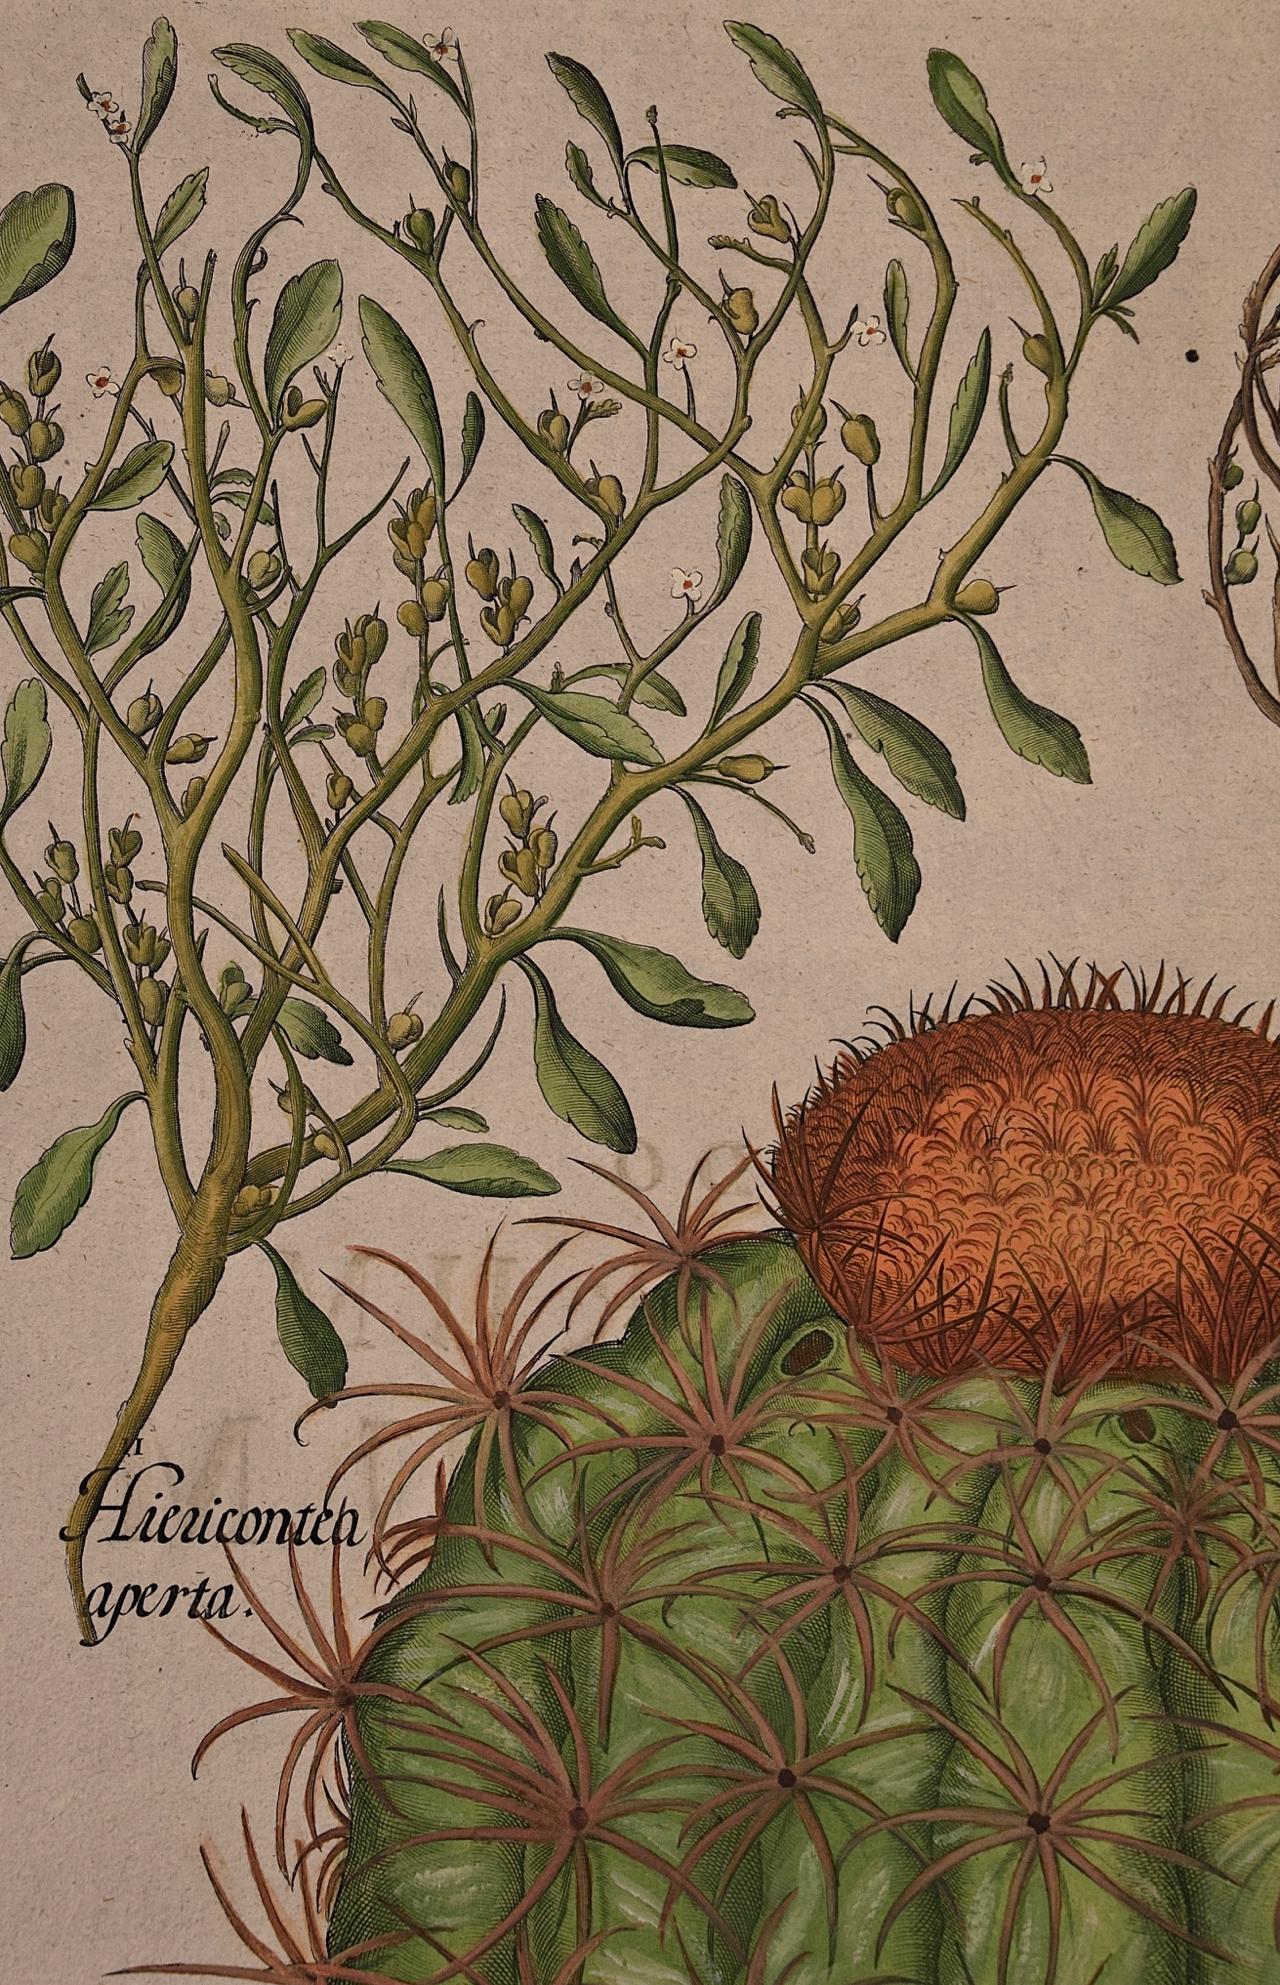 Cactus & Rose of Jericho Plants: A Besler Hand-colored Botanical Engraving  - Print by Basilius Besler